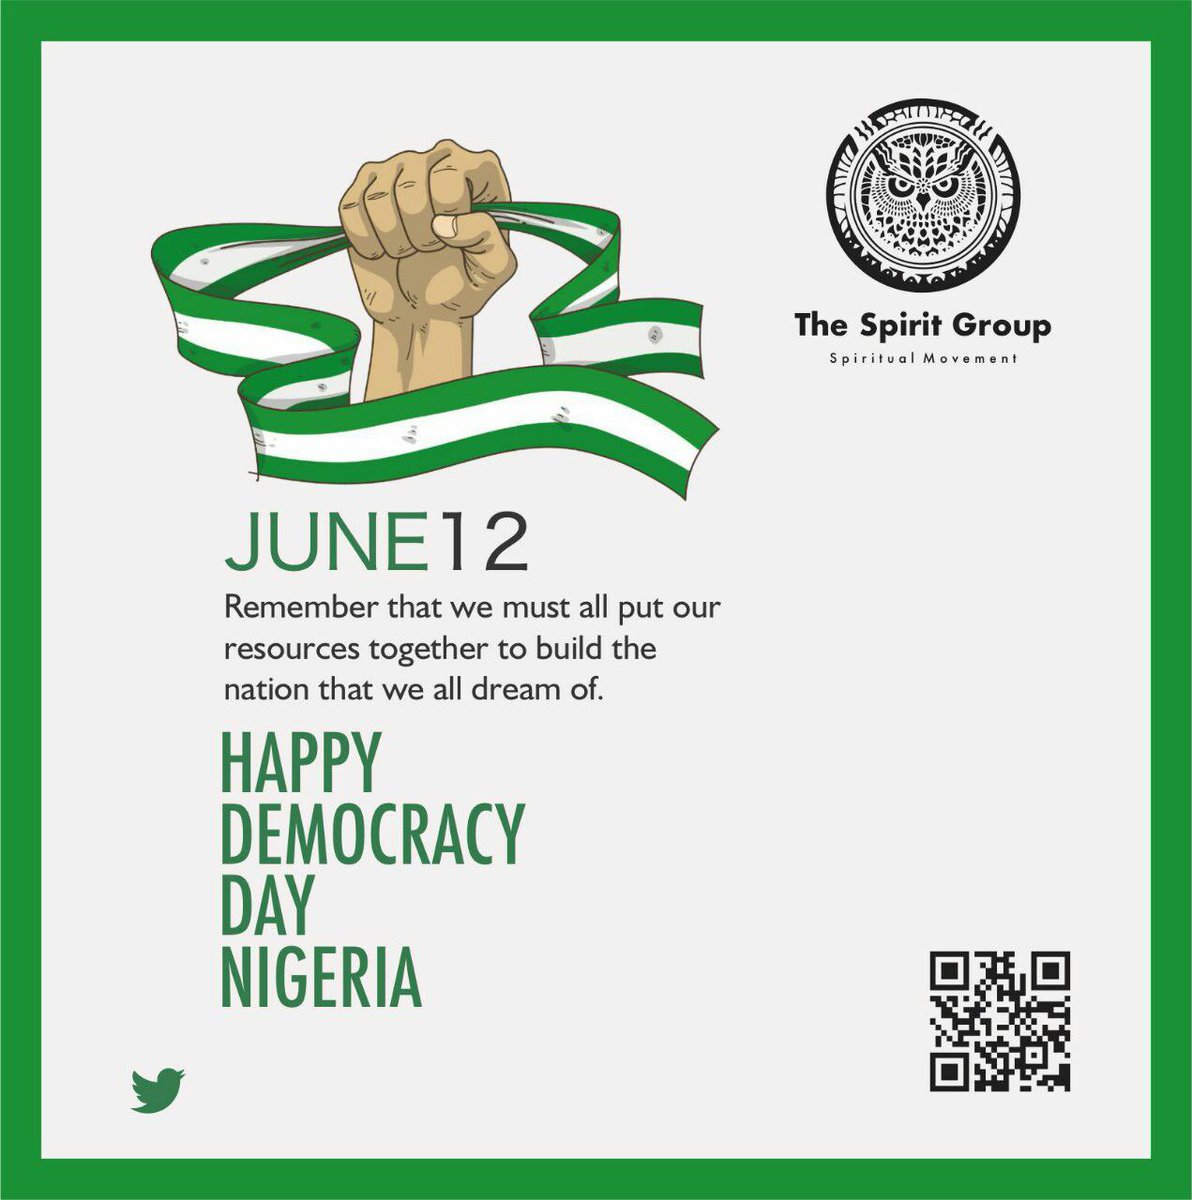 DEMOCRACY DAY.
#June12.
#Nigeria 
#spirituaLMovement.